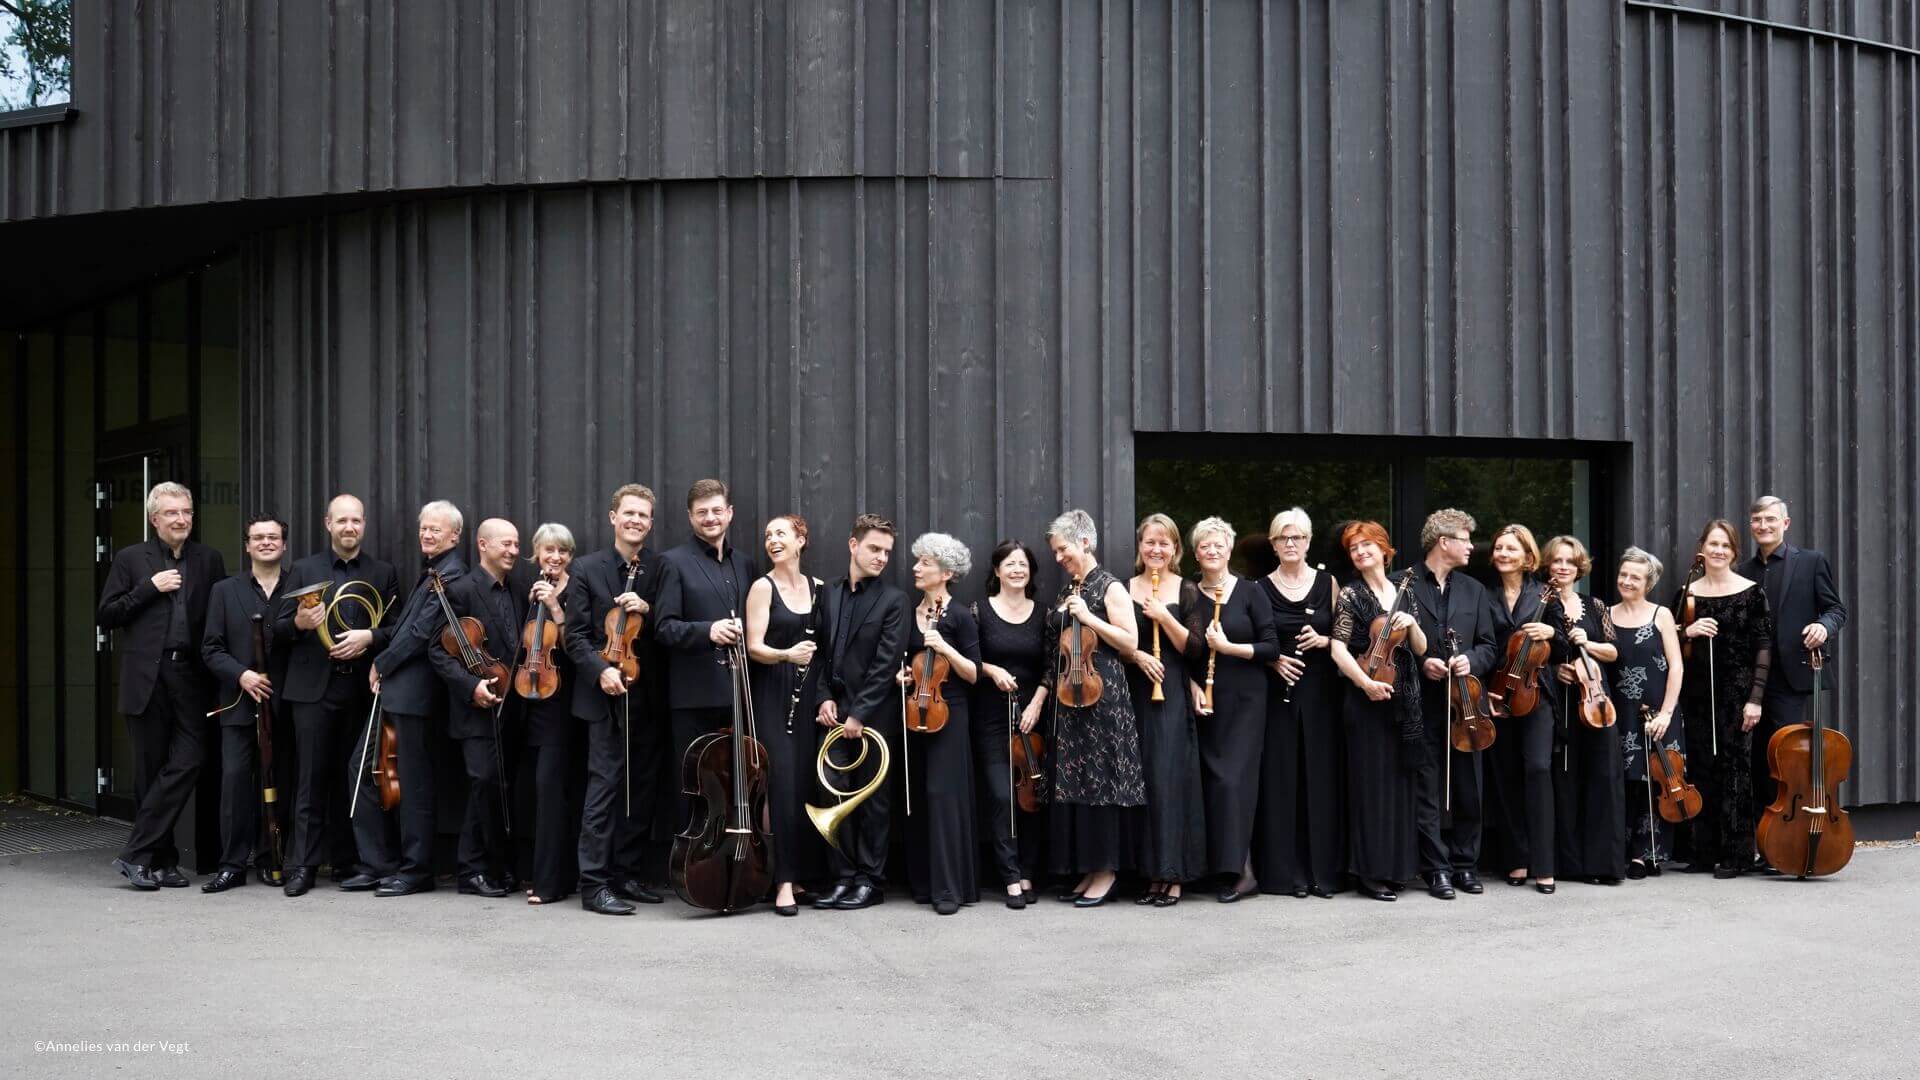 The Freiburg Baroque Orchestra